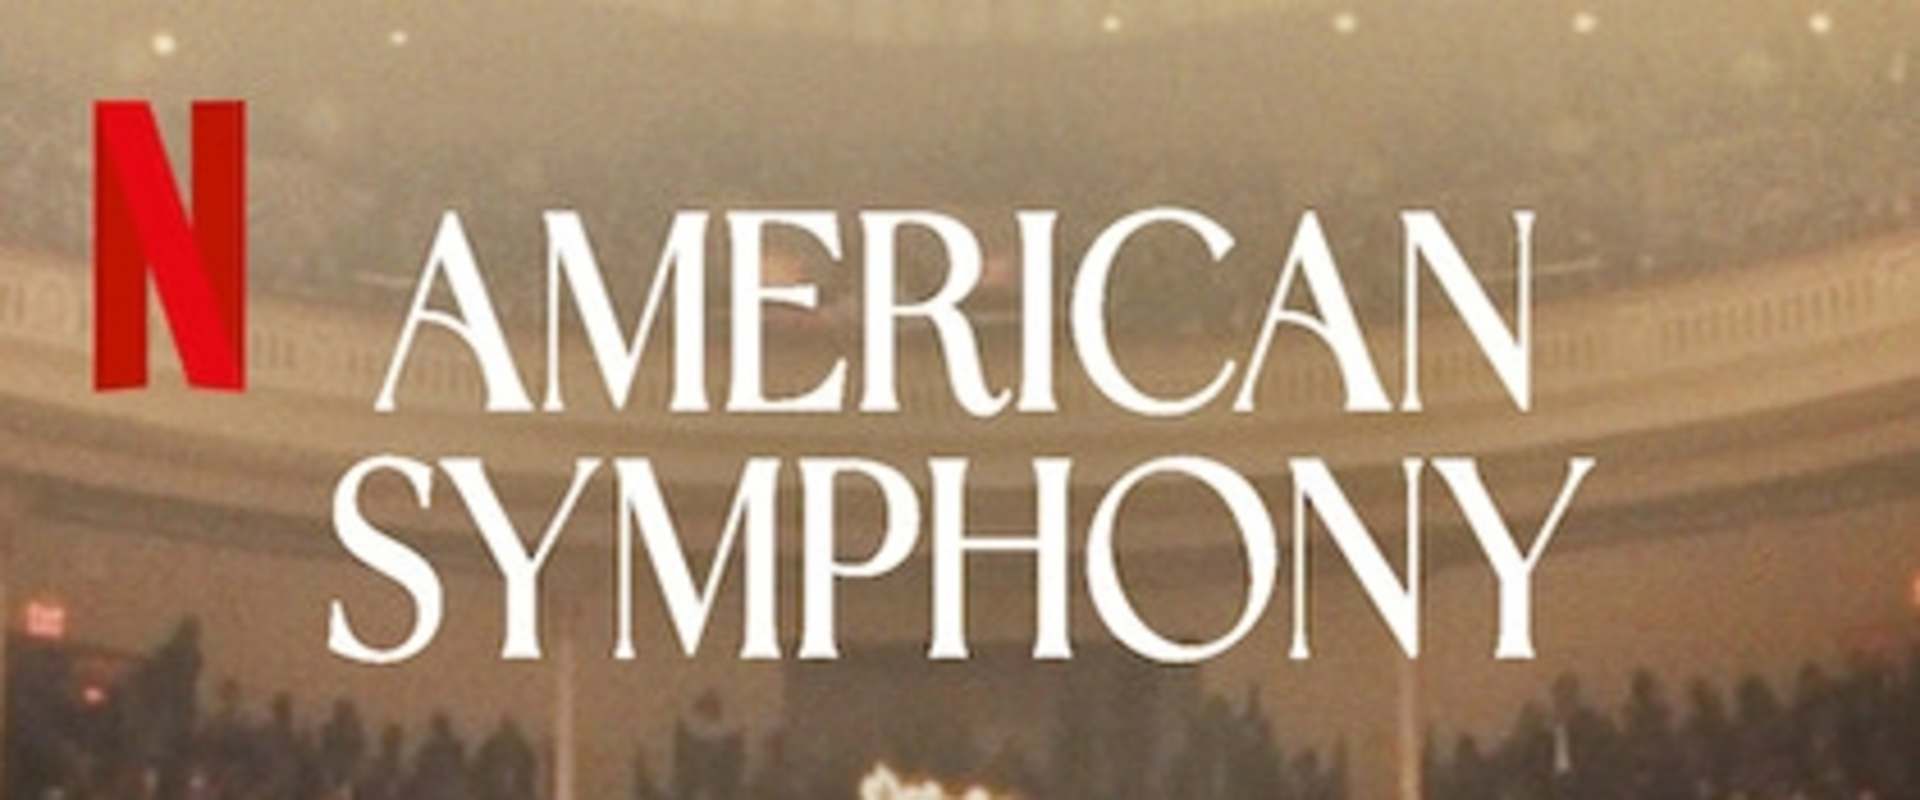 American Symphony background 2